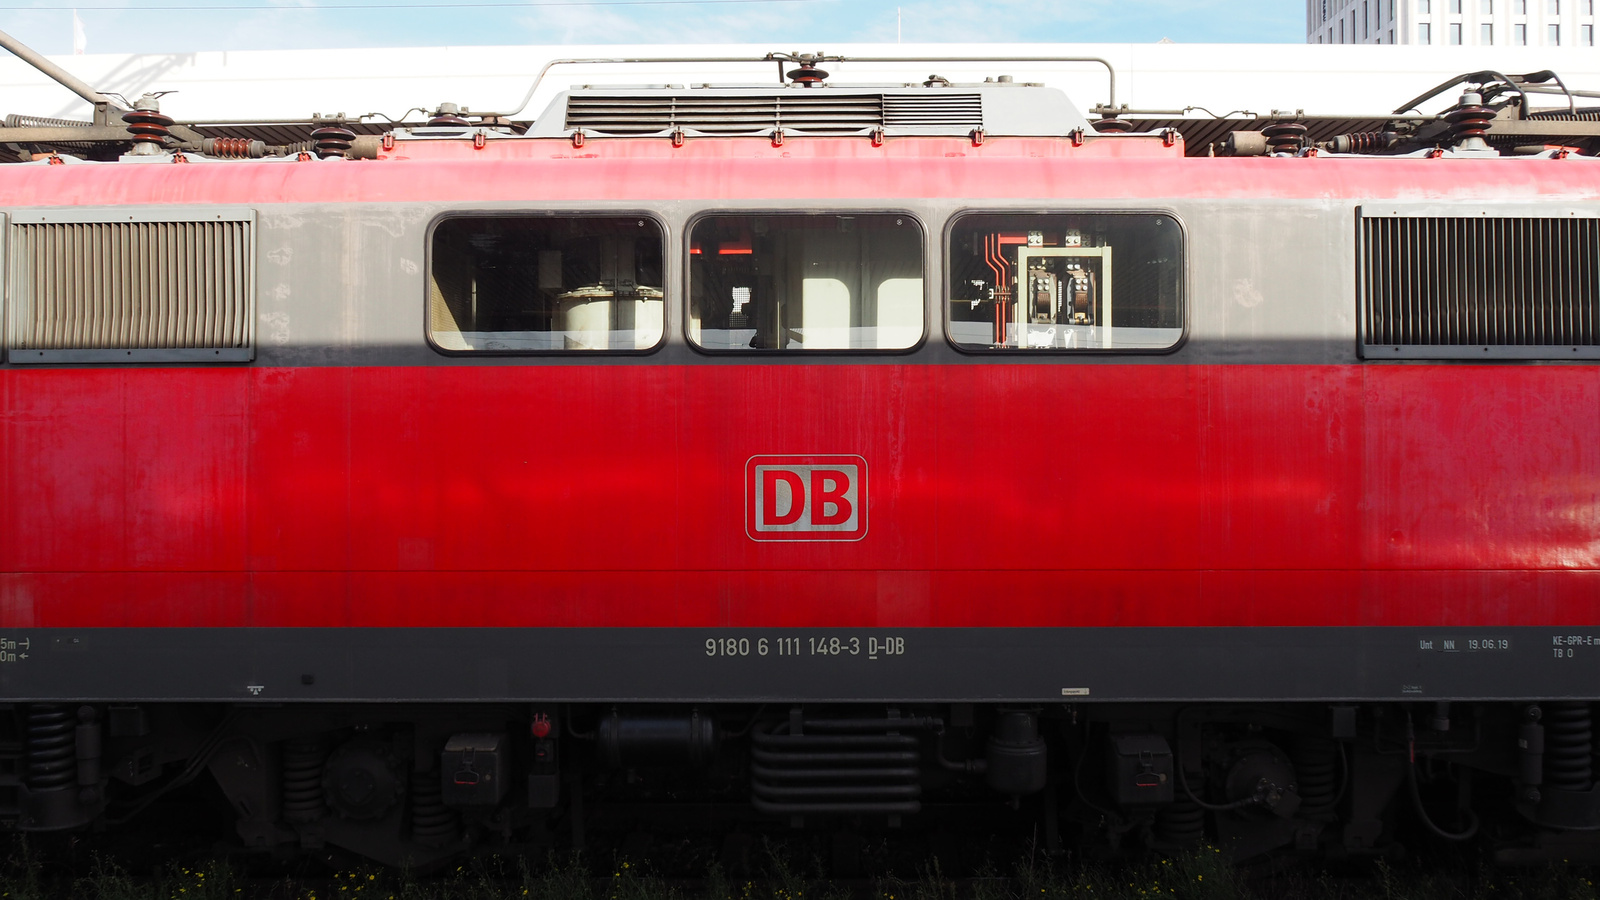 D-DB 91 80 6 111 148-3, SzG3